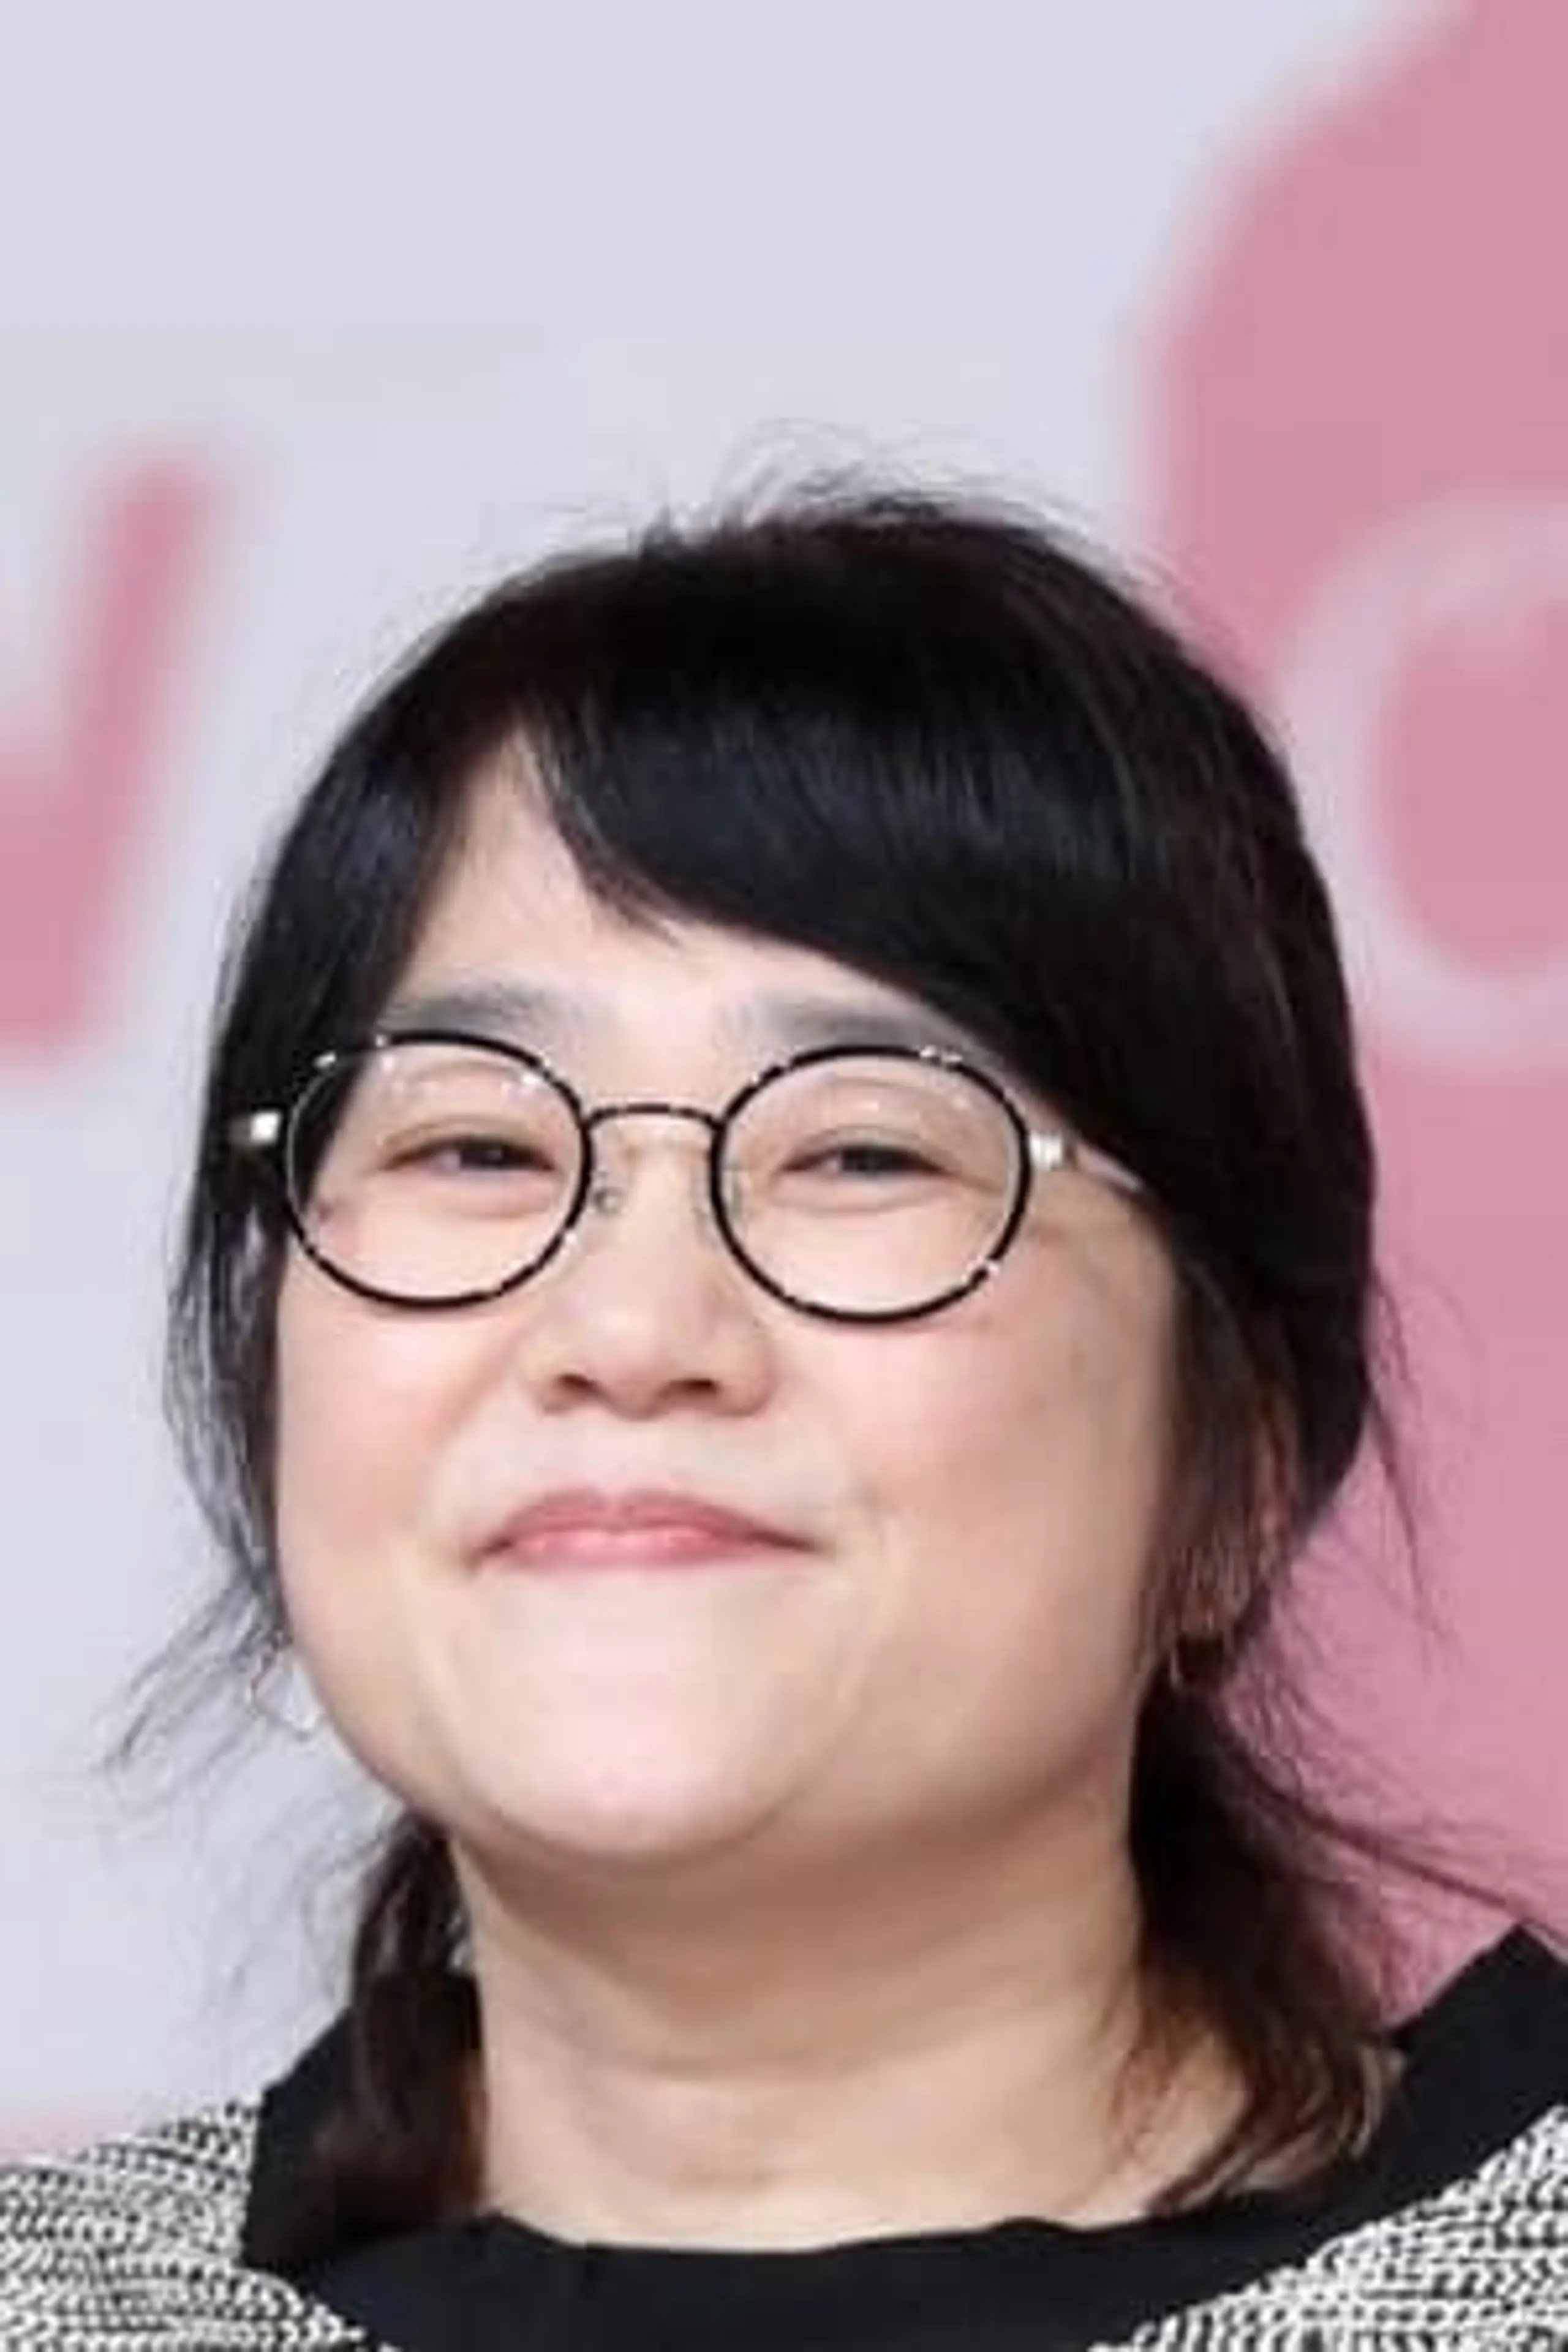 Yang Hee Seung